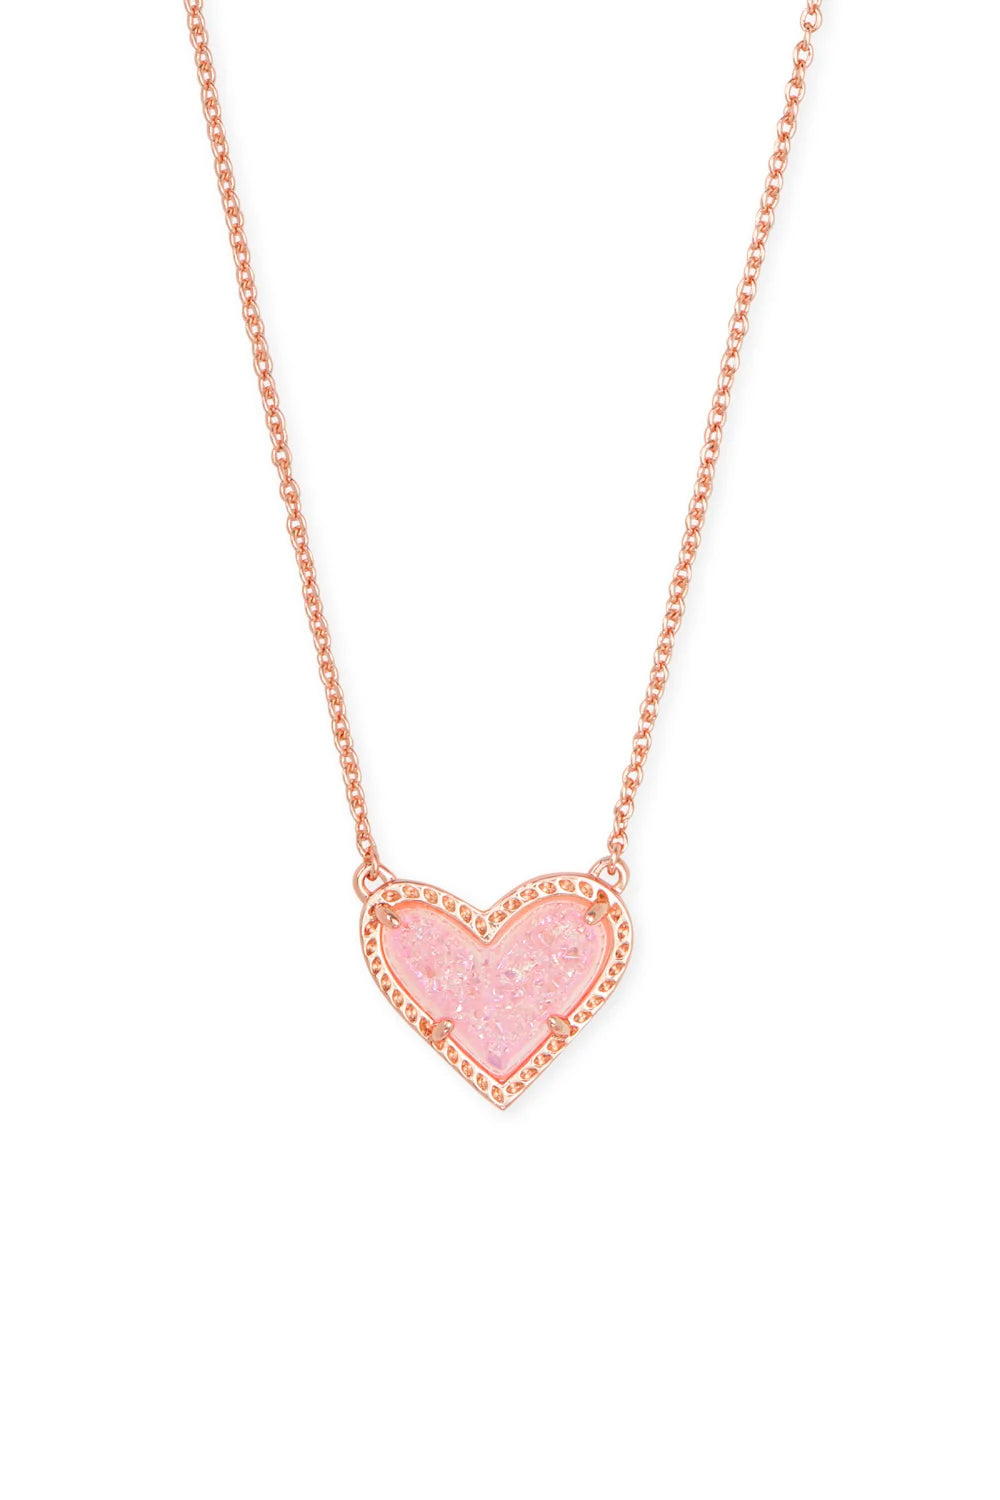 Kendra Scott: Ari Heart Rose Gold Pendant Necklace - Pink Drusy | Makk Fashions